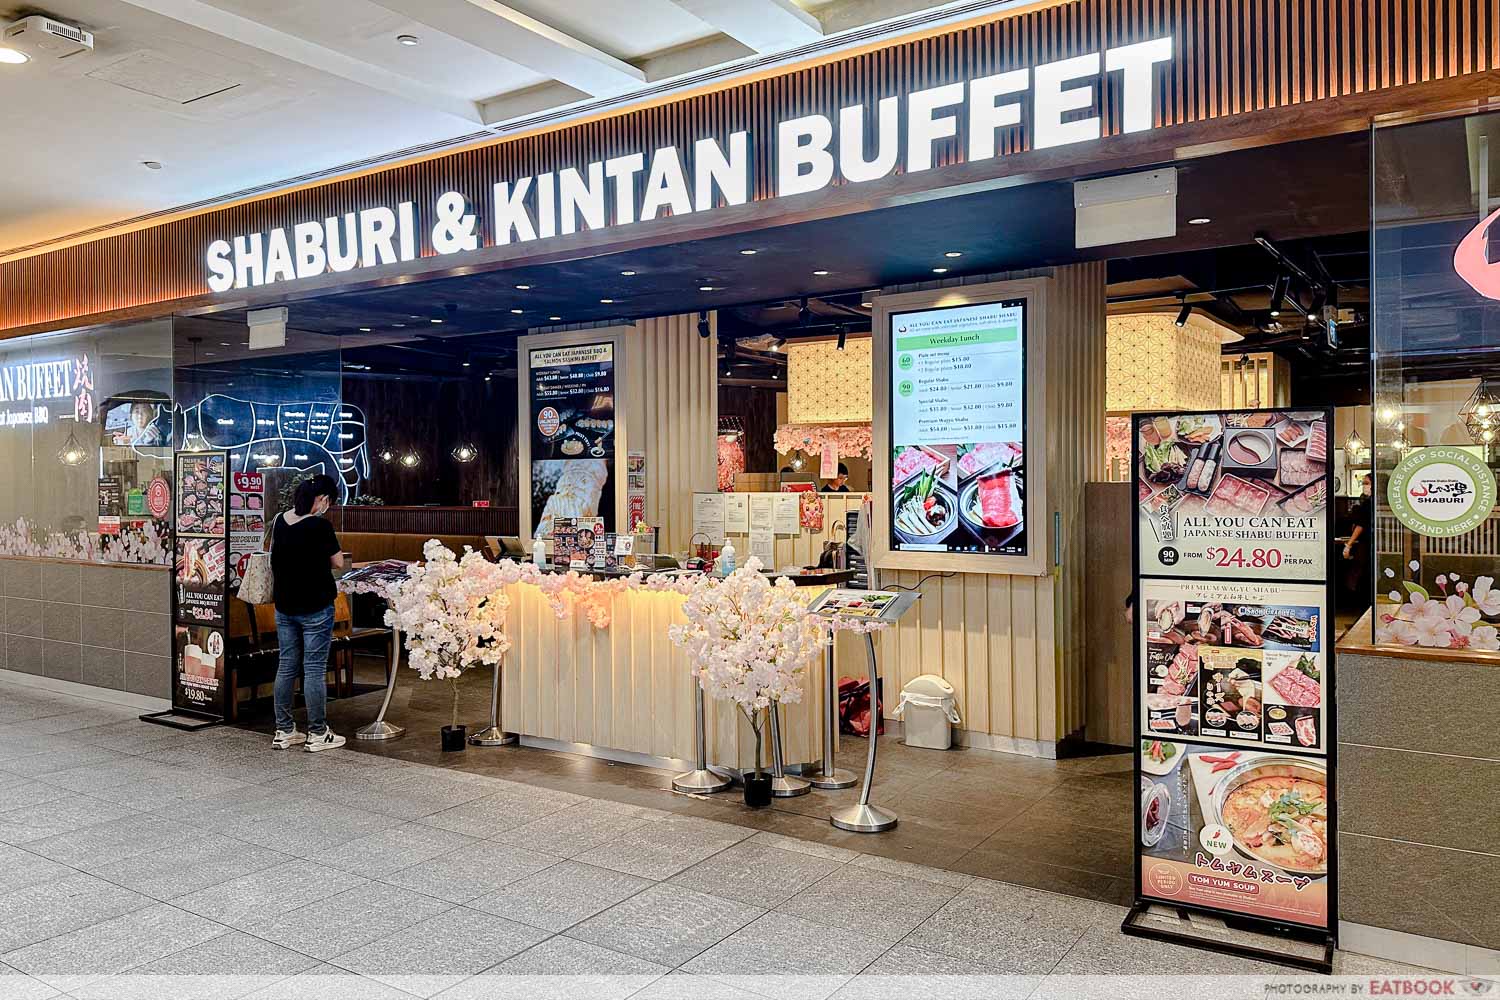 Shaburi-Kintan-Buffet-sakura-buffet-storefront